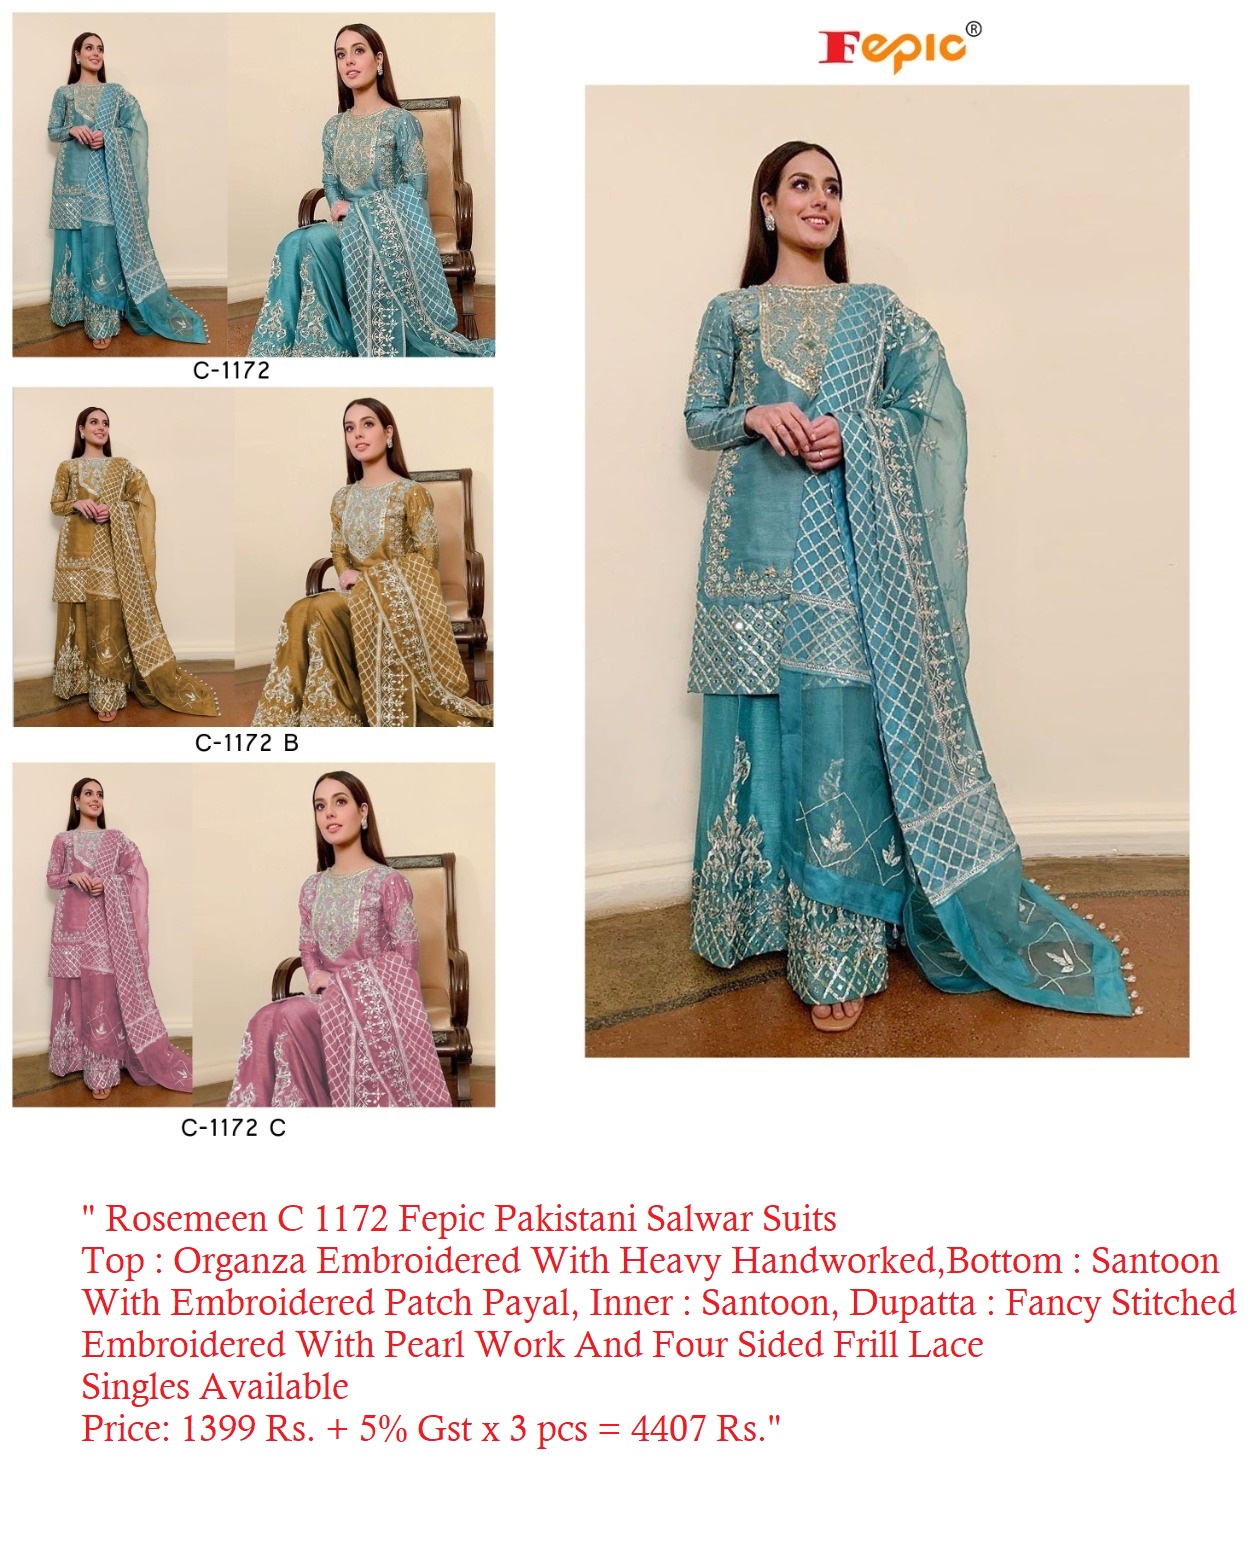 Fepic Rosemeen C 1172 Pakistani Suits Catalog Lowest Price